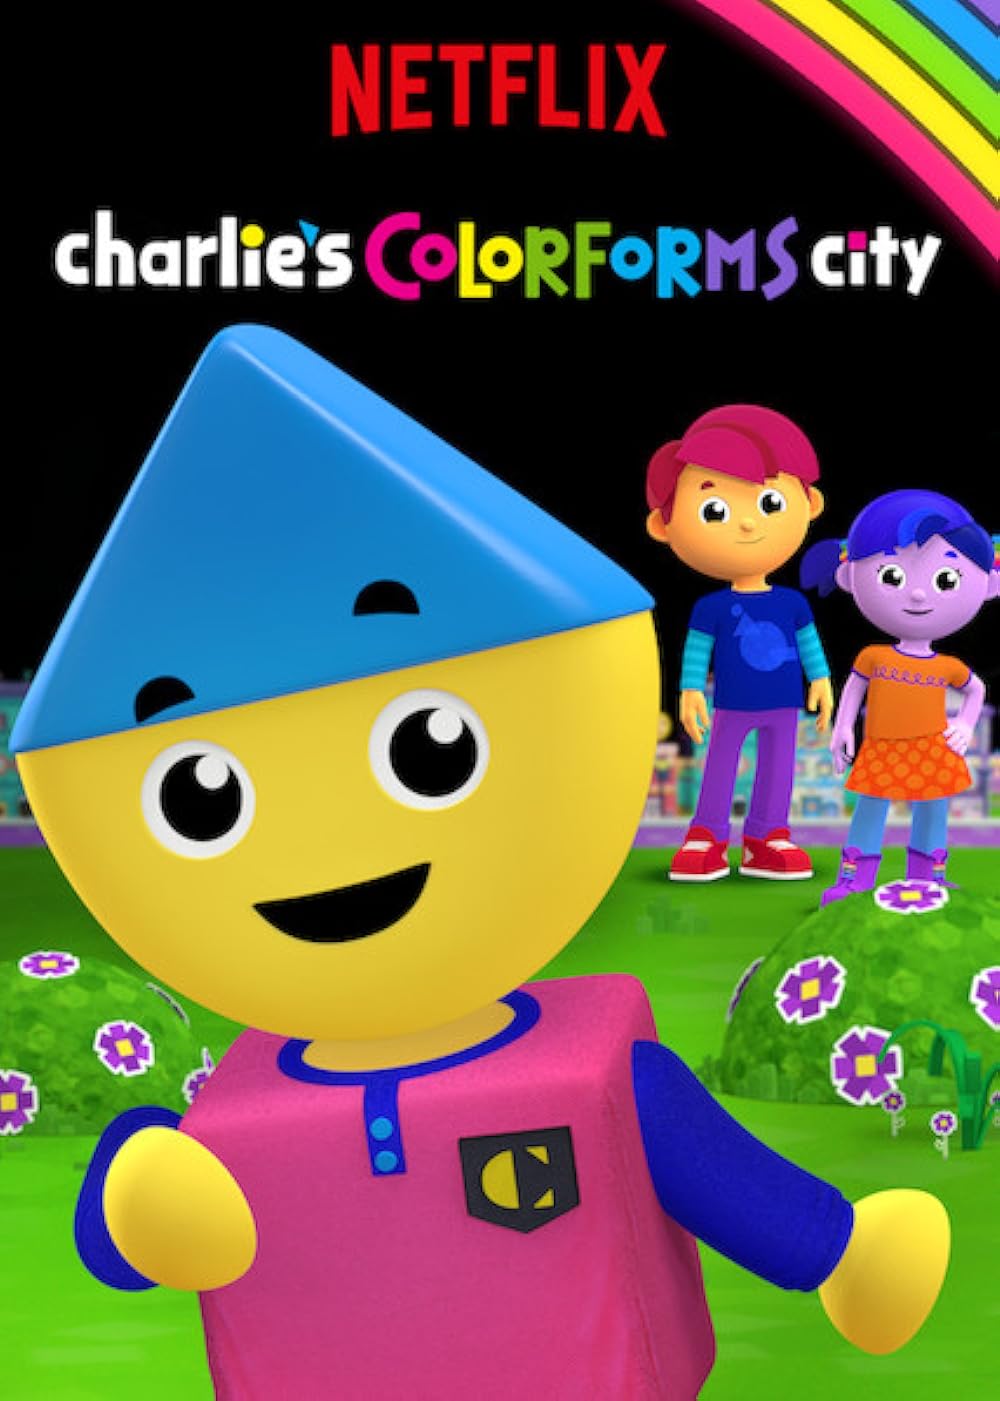 Charlie's Colorforms City